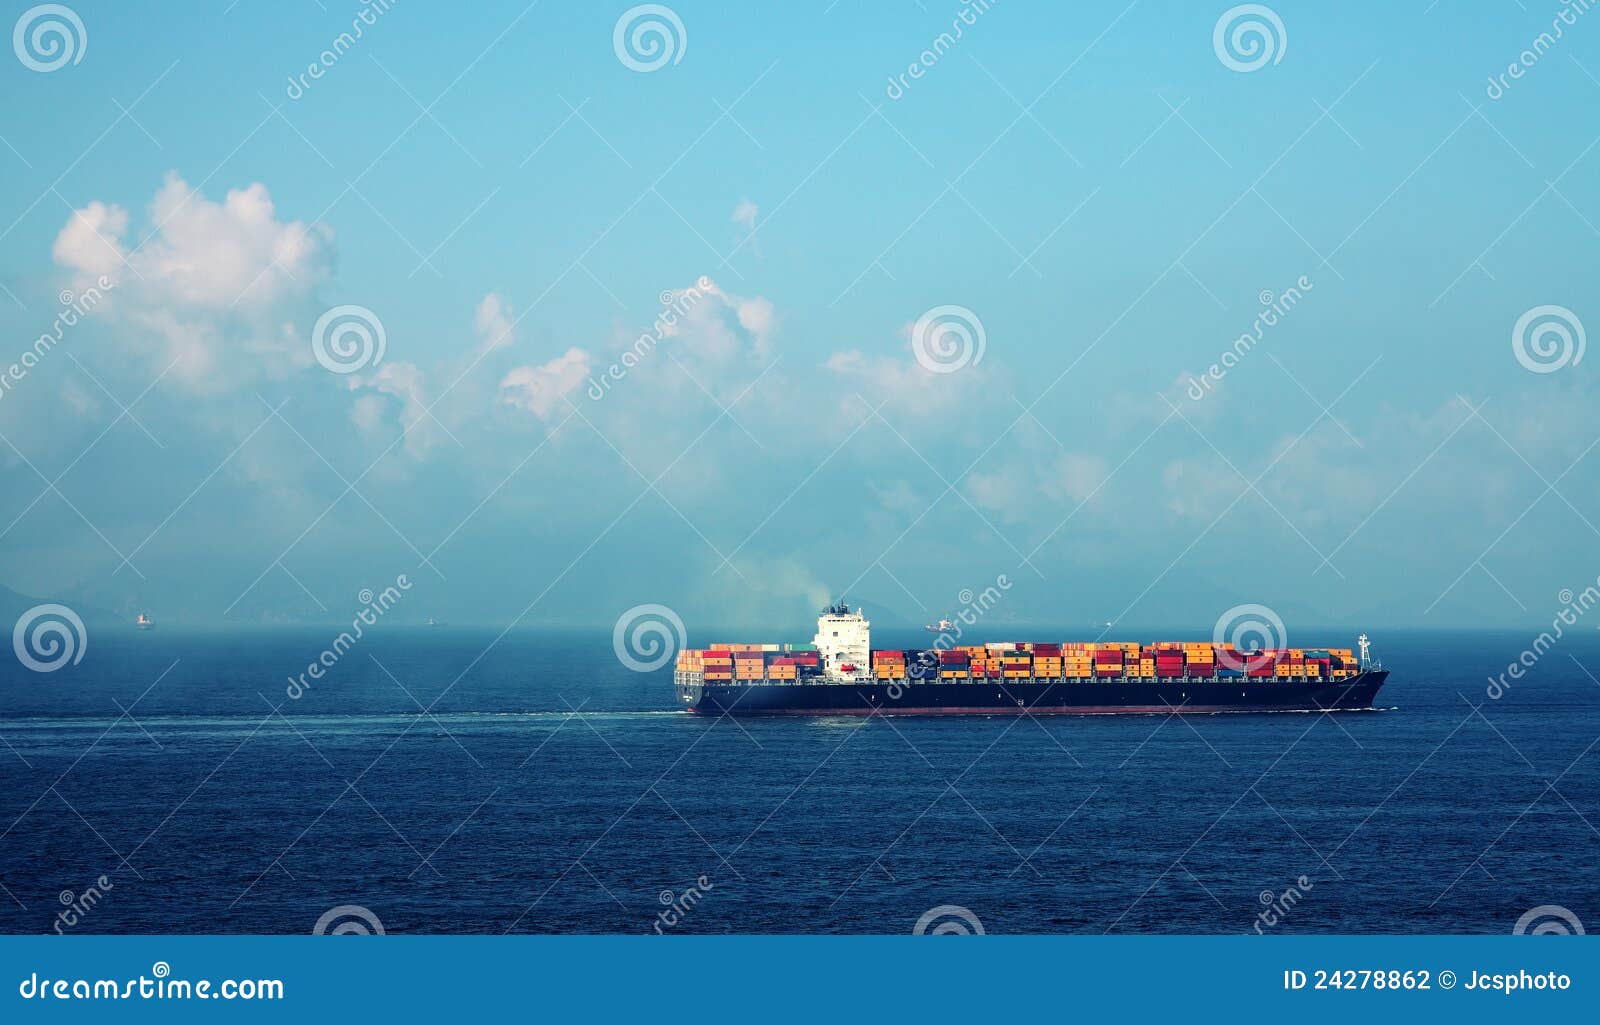 cargo vessel